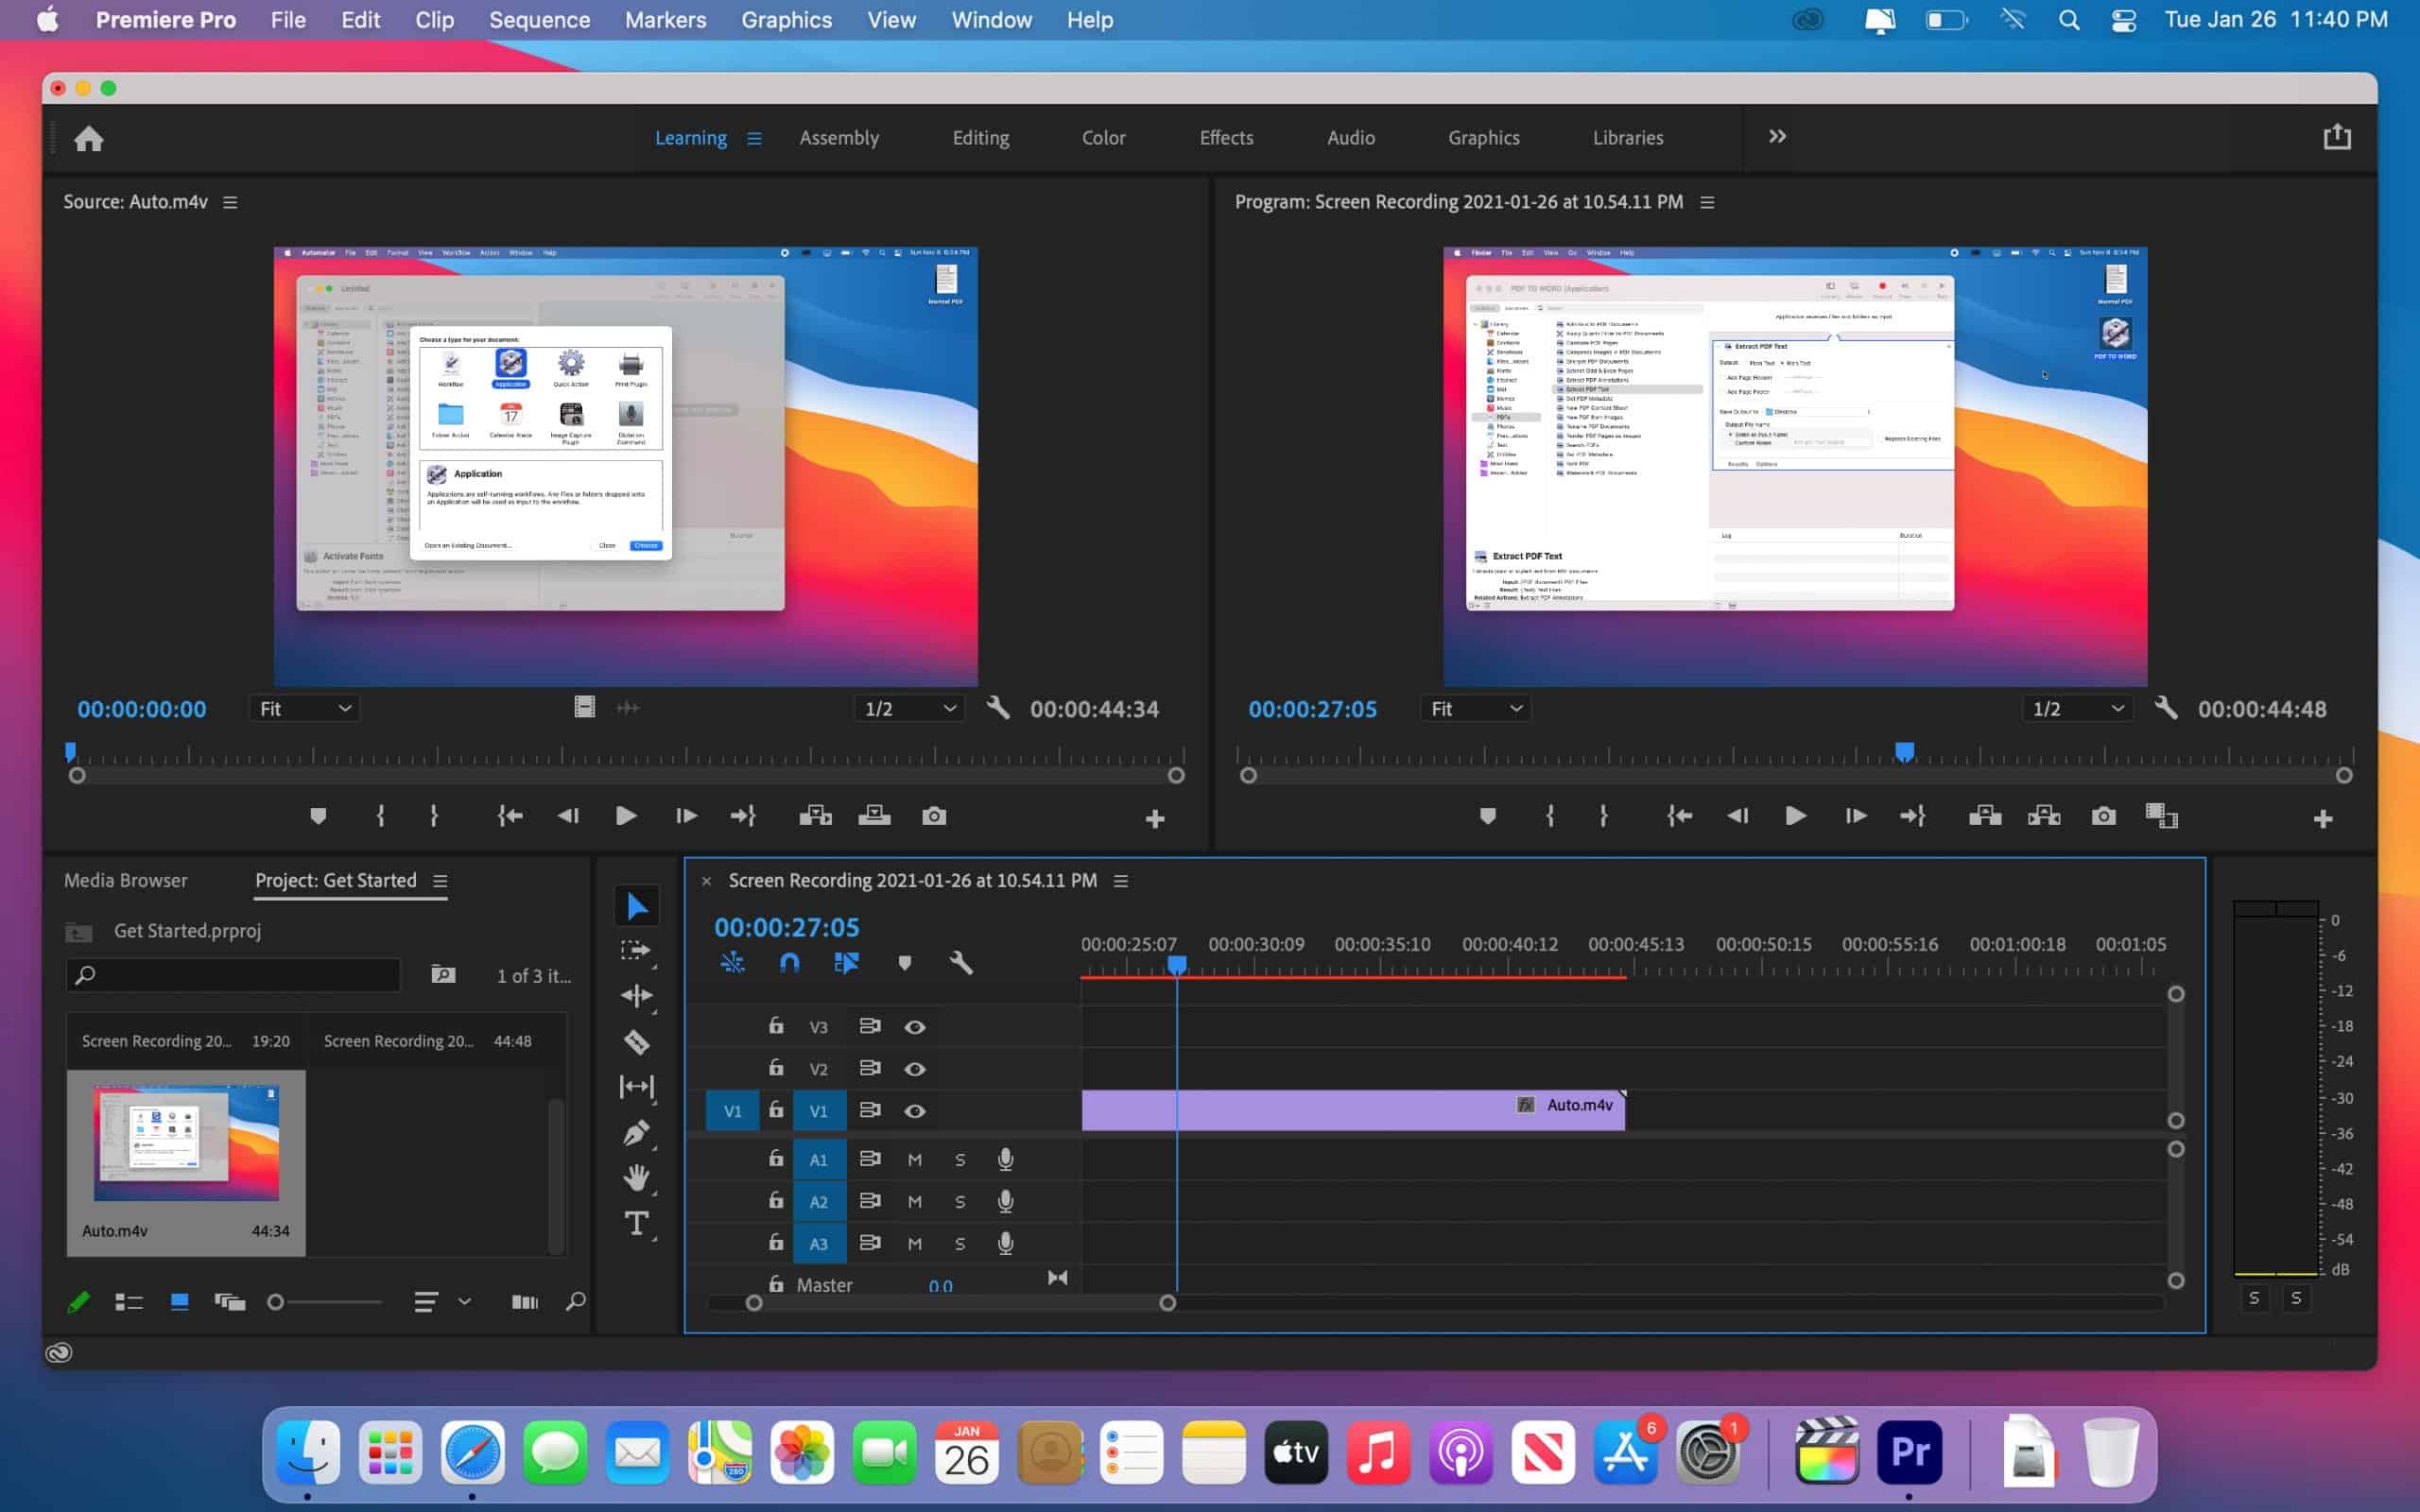 mac video editor